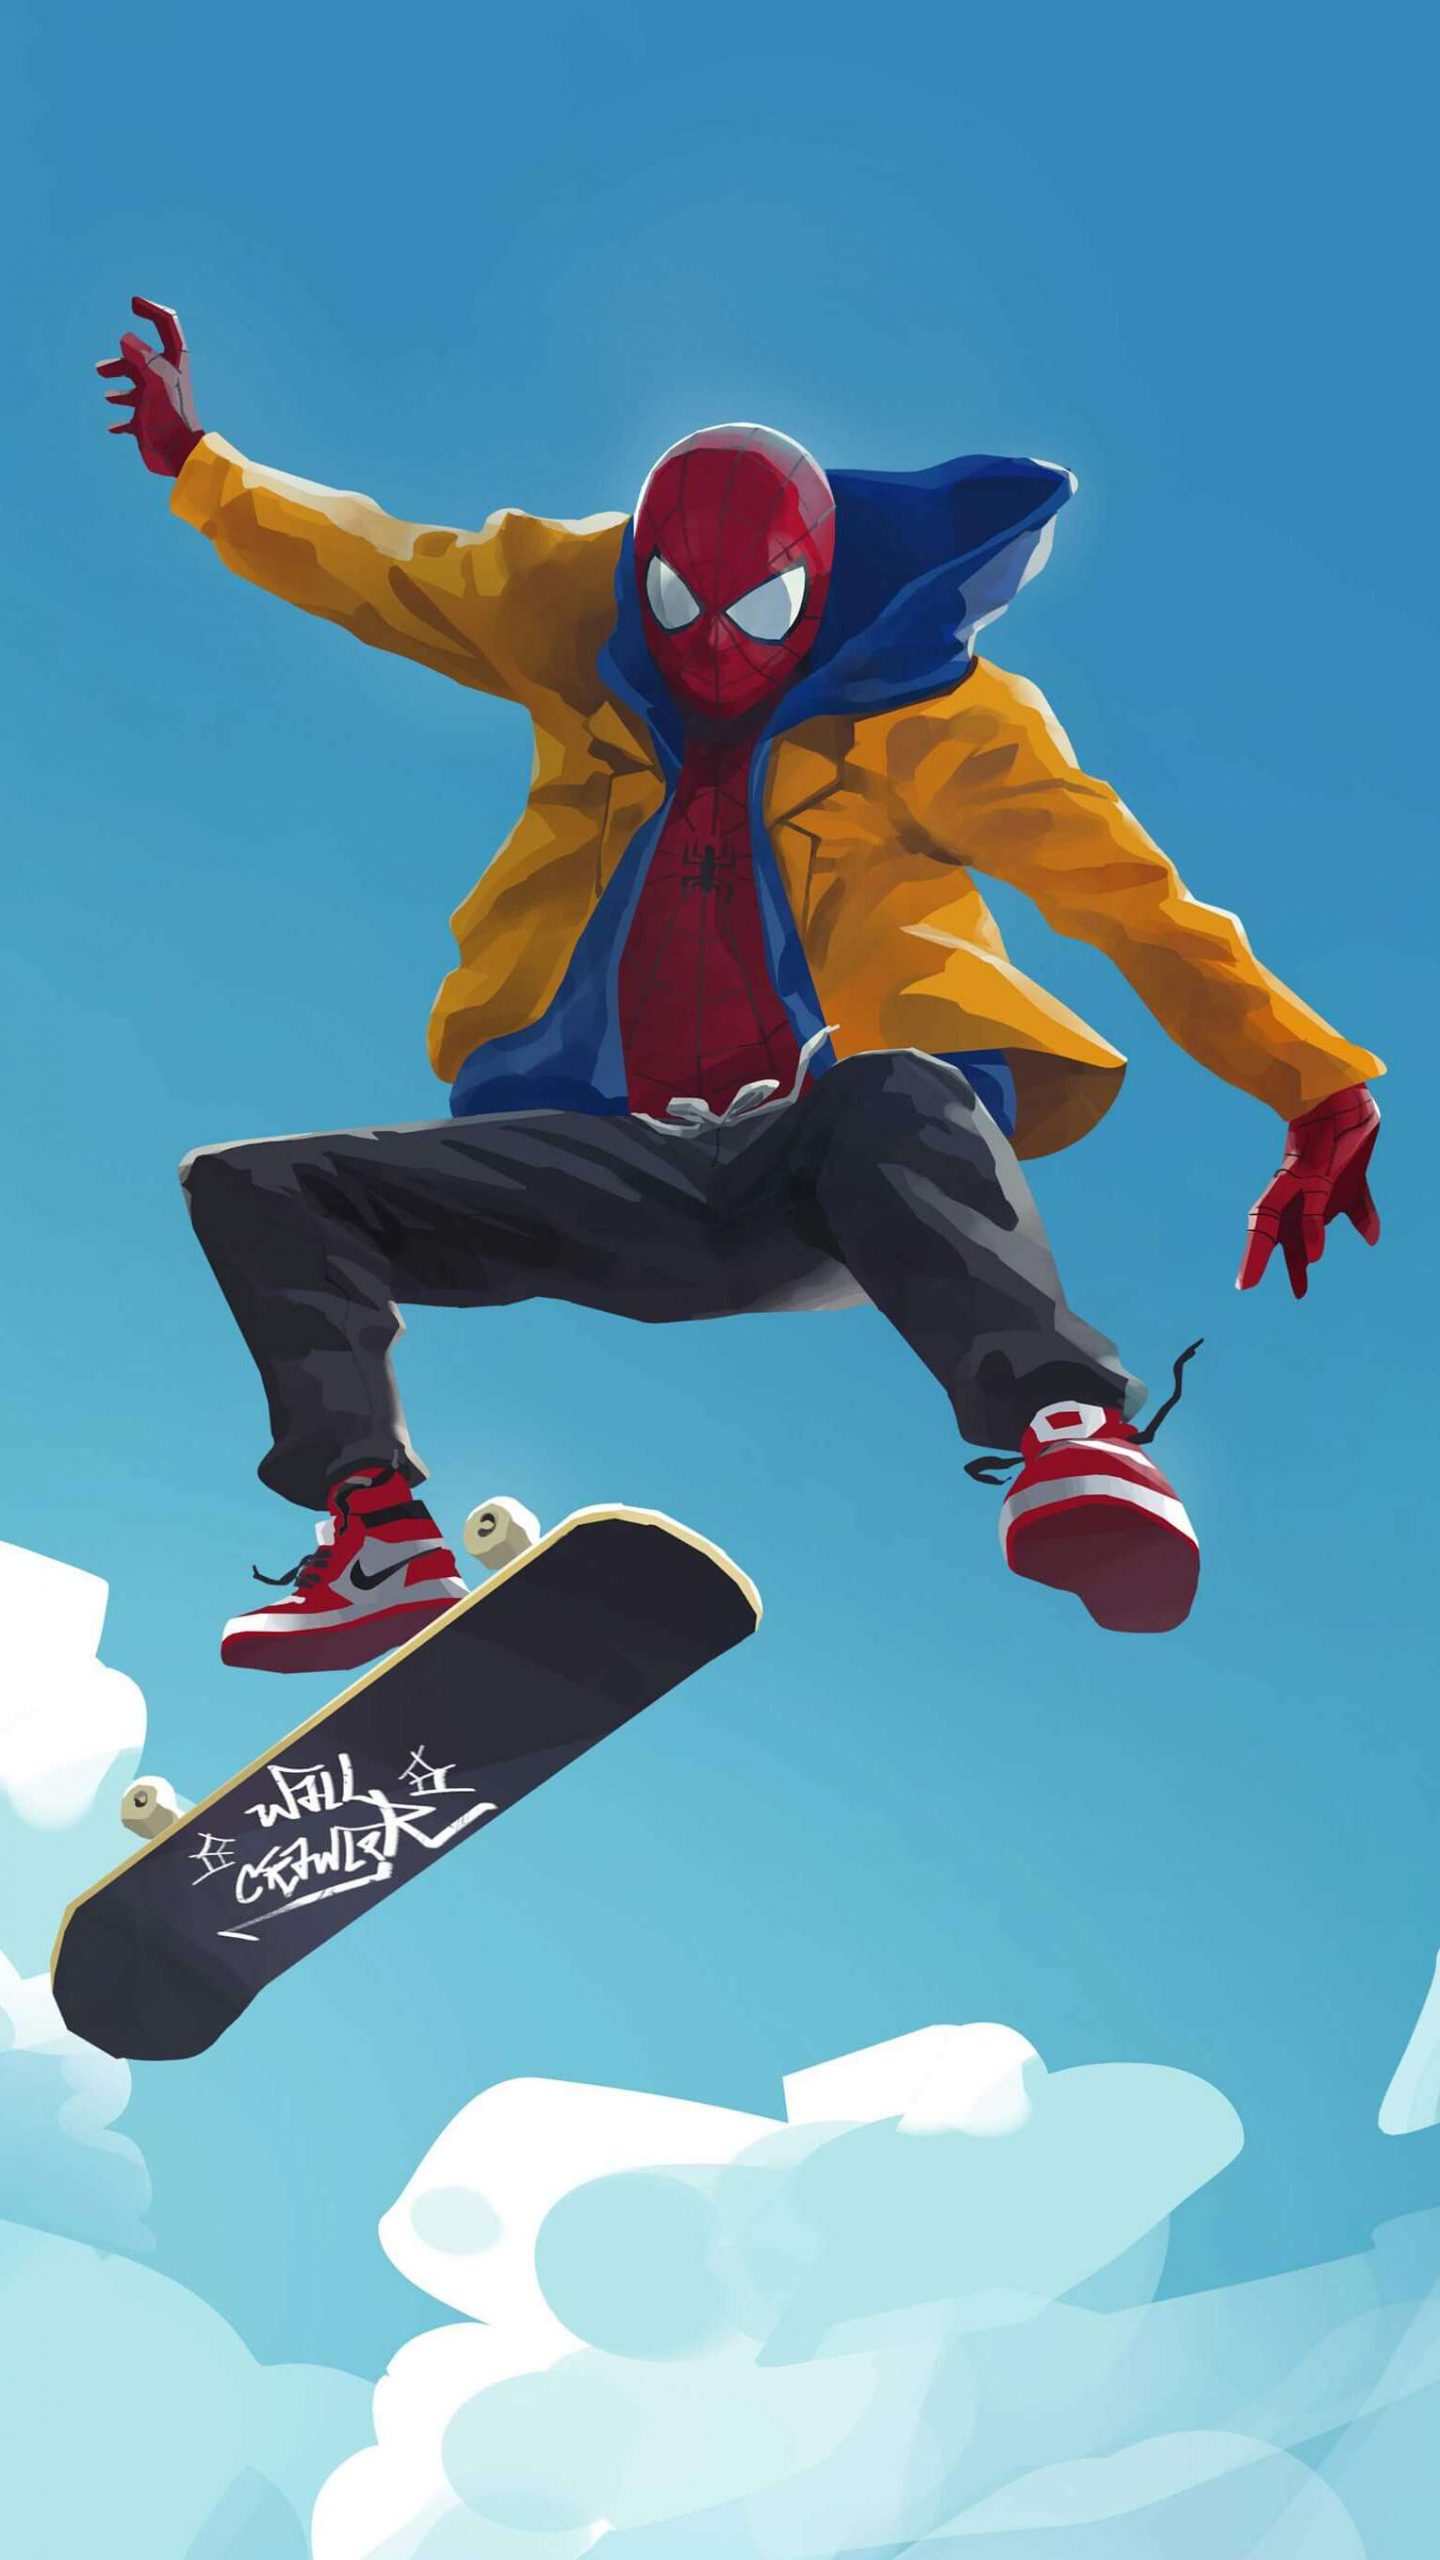 Spiderman Skateboarding Wallpaper iPhone